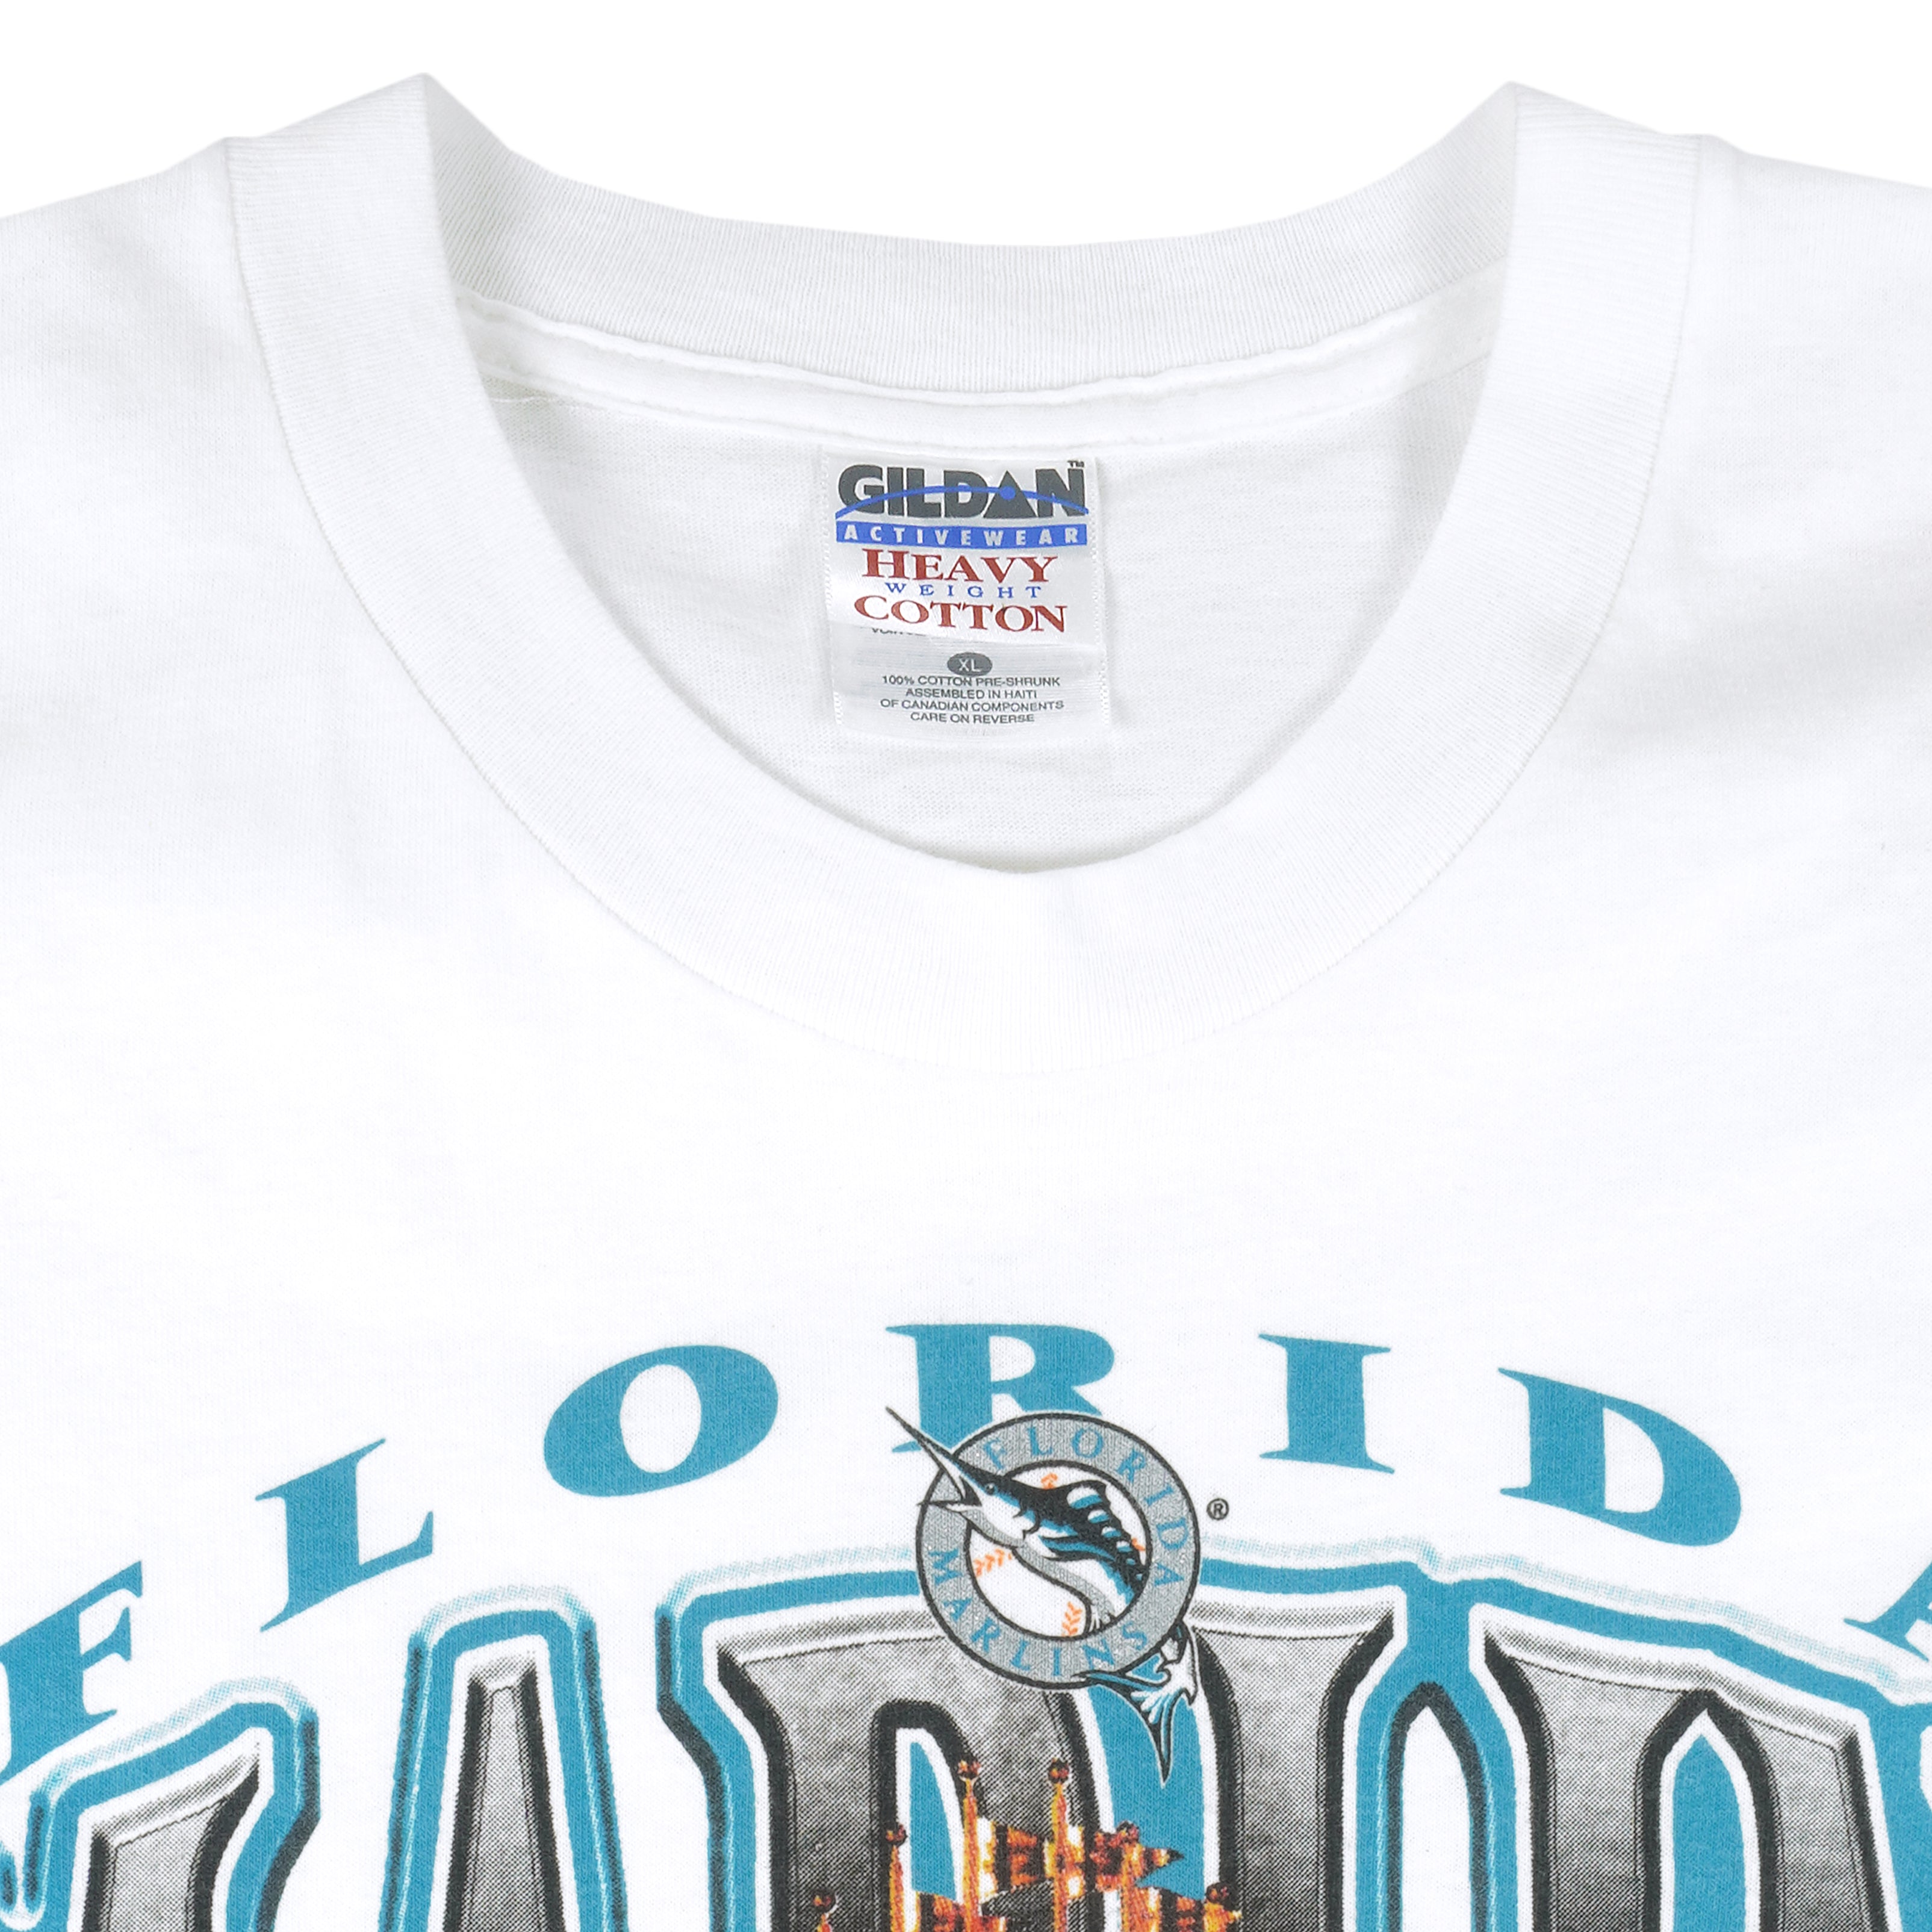 Vintage Florida Marlins T Shirt Deadstock 1991 Trench MLB 